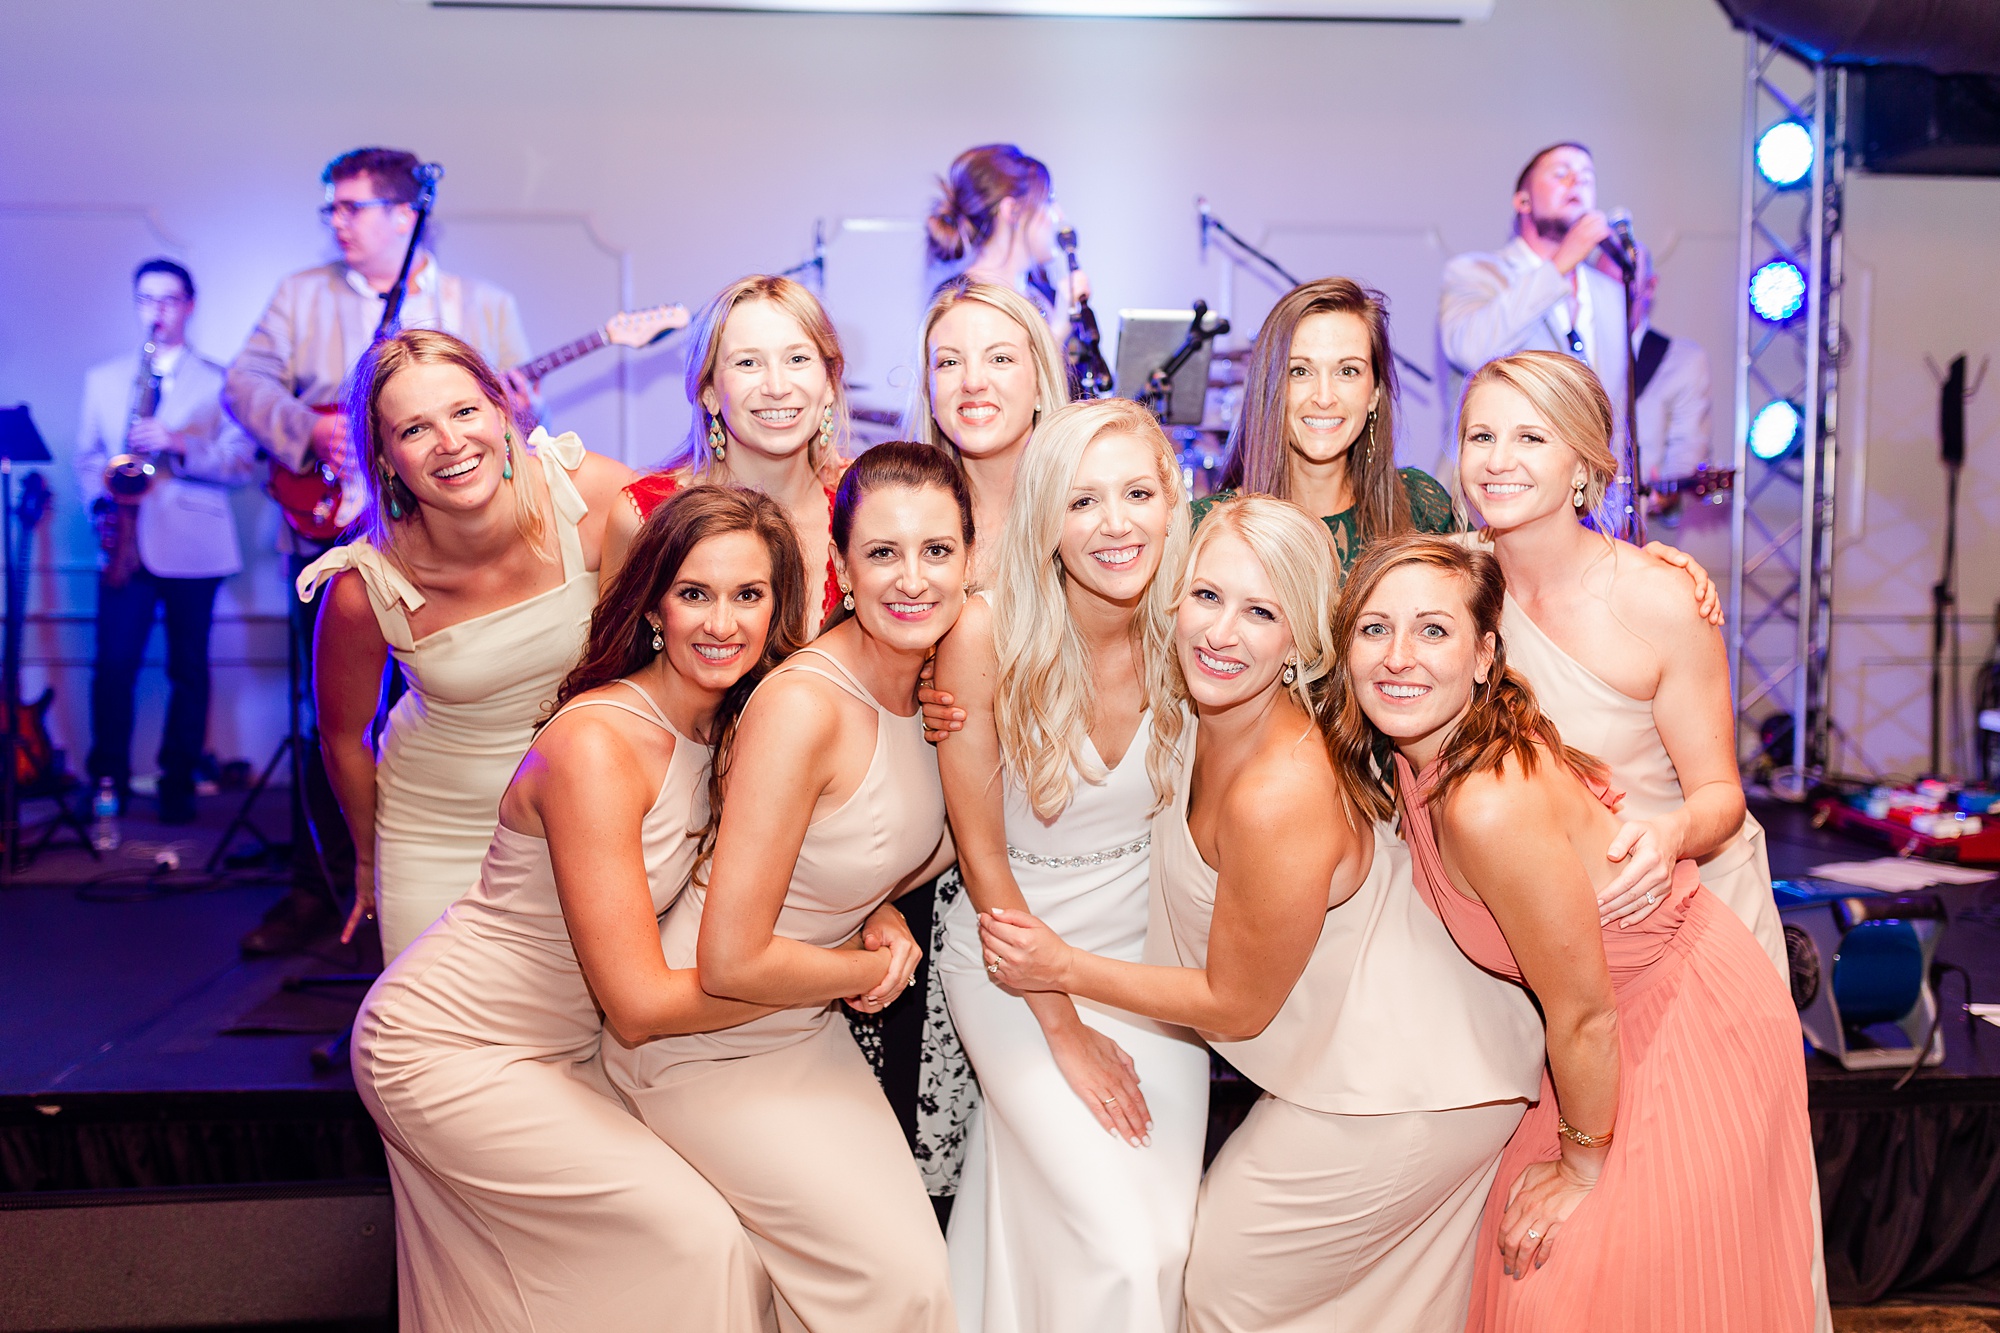 bride poses with bridesmaids